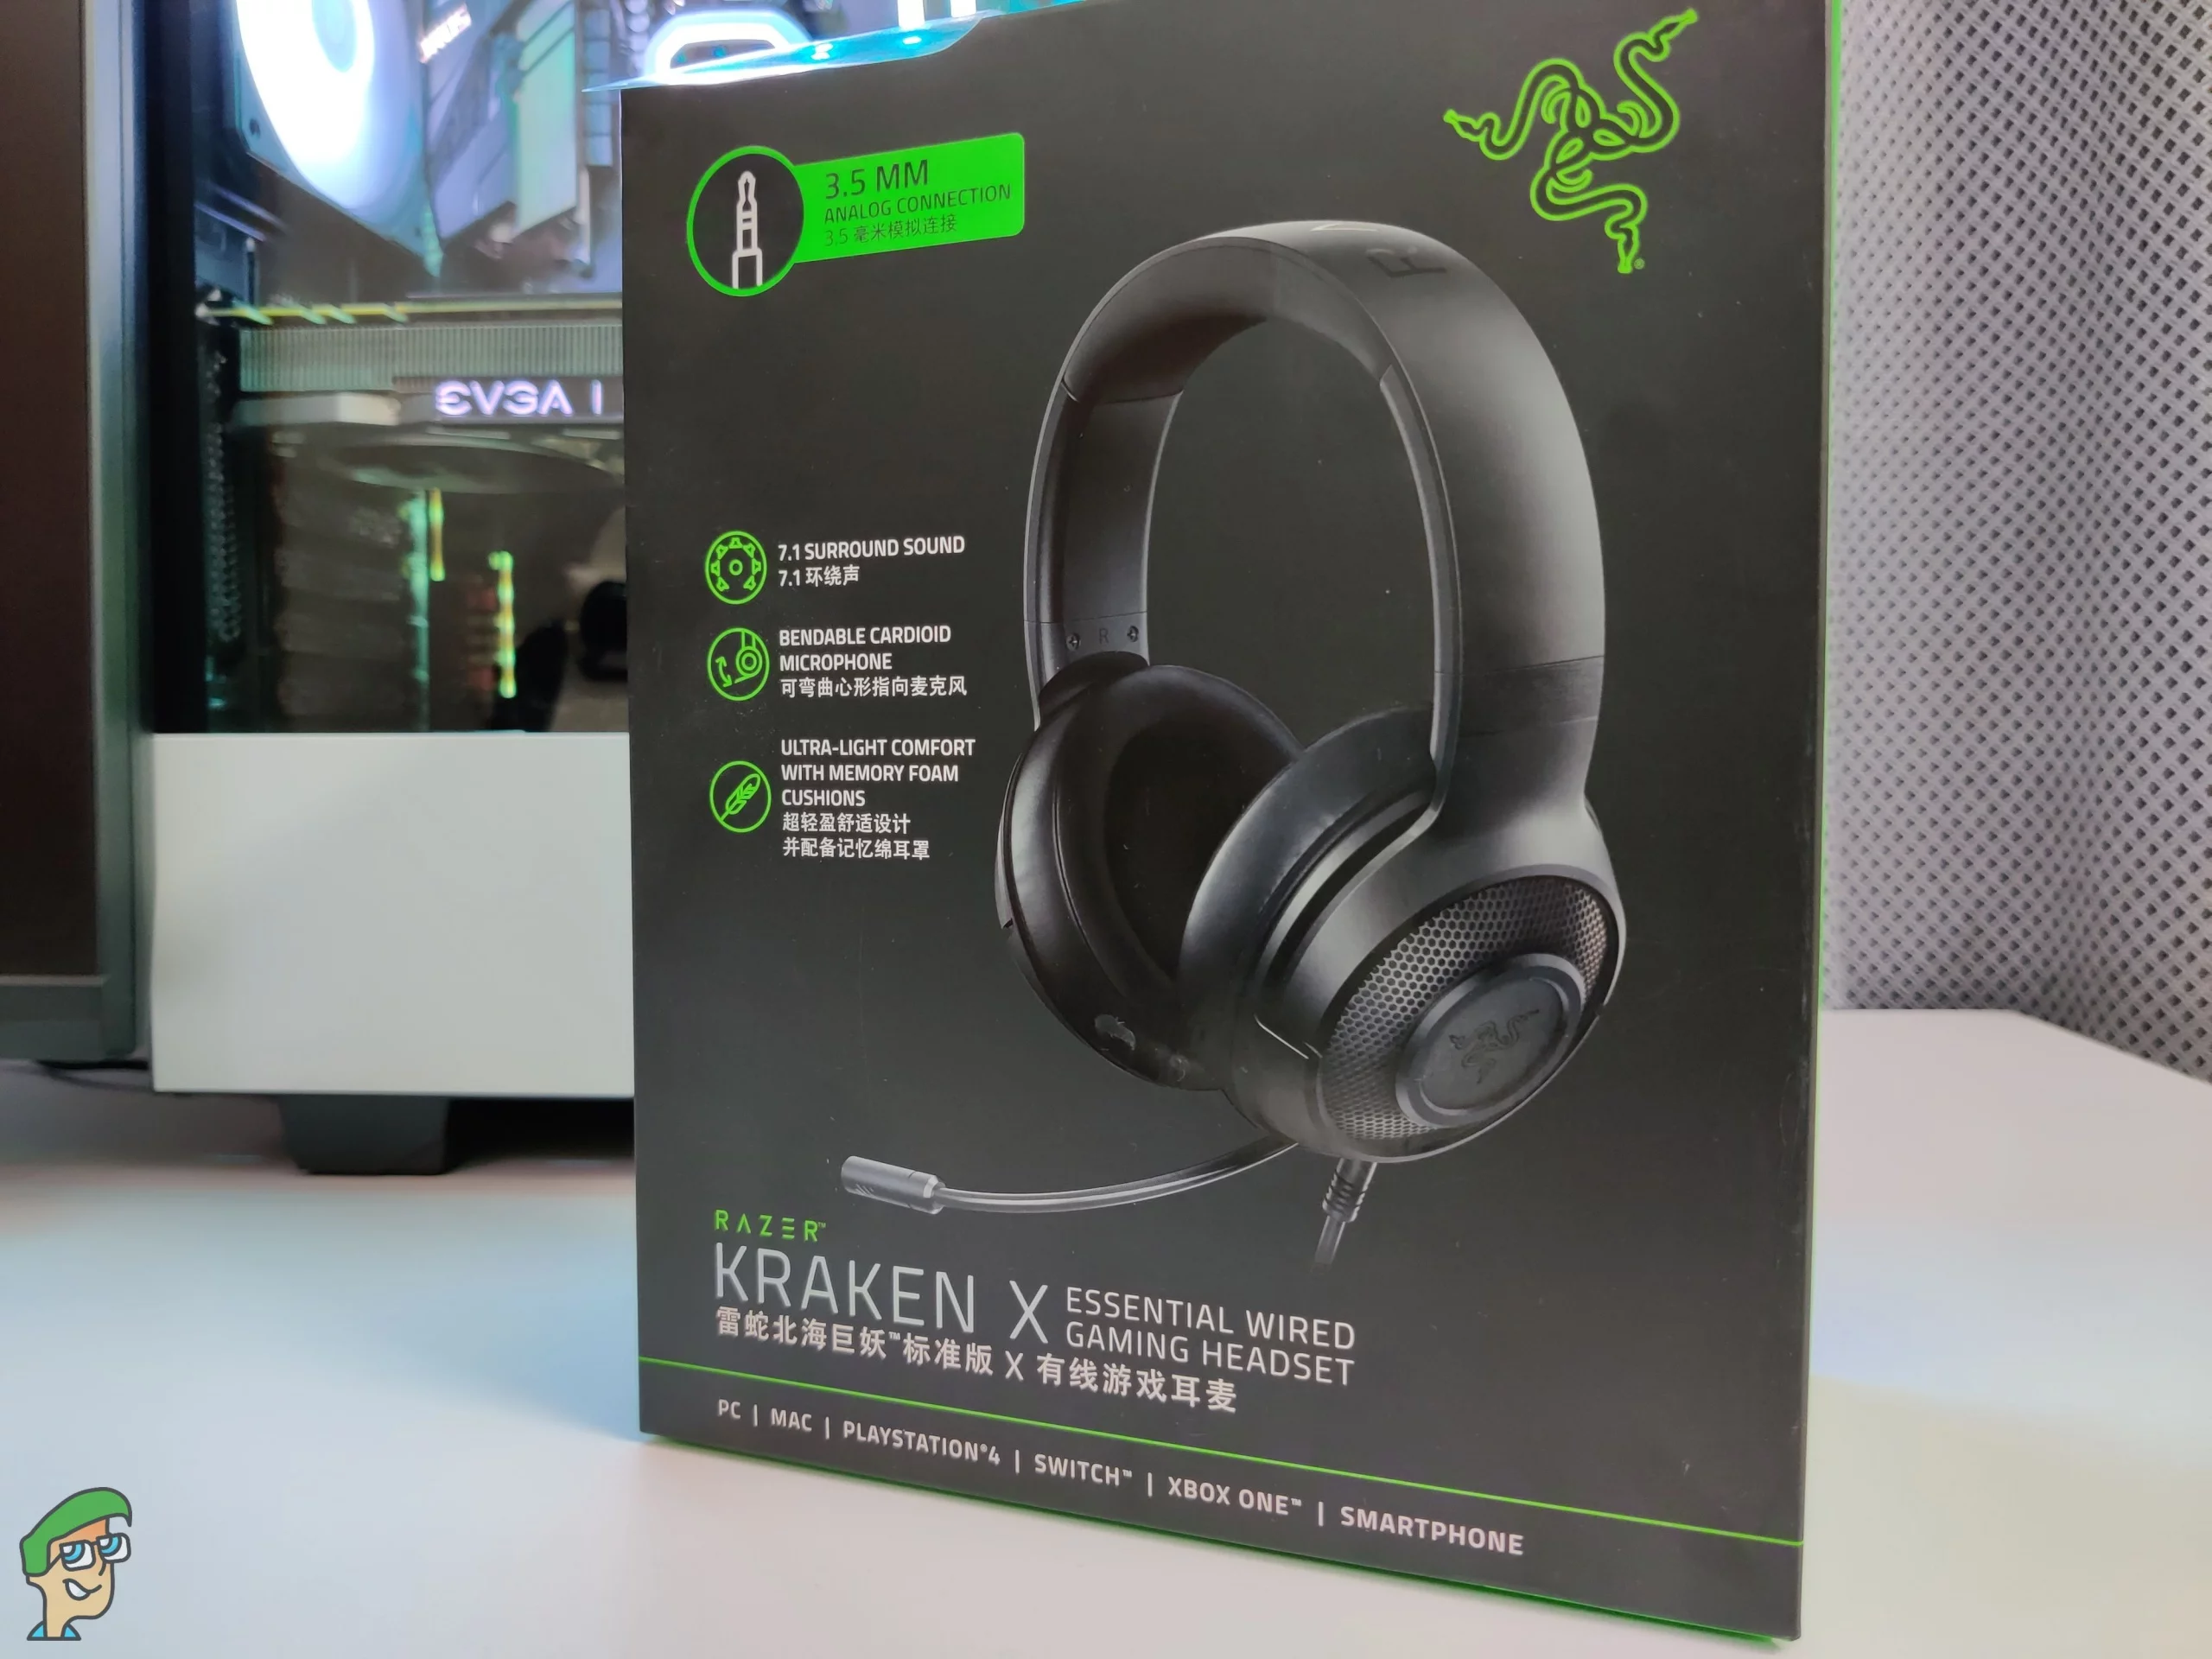 Razer Kraken X Lite Wired 7.1 Gaming Headset - PC, MAC, PS4, Switch, Xbox 1